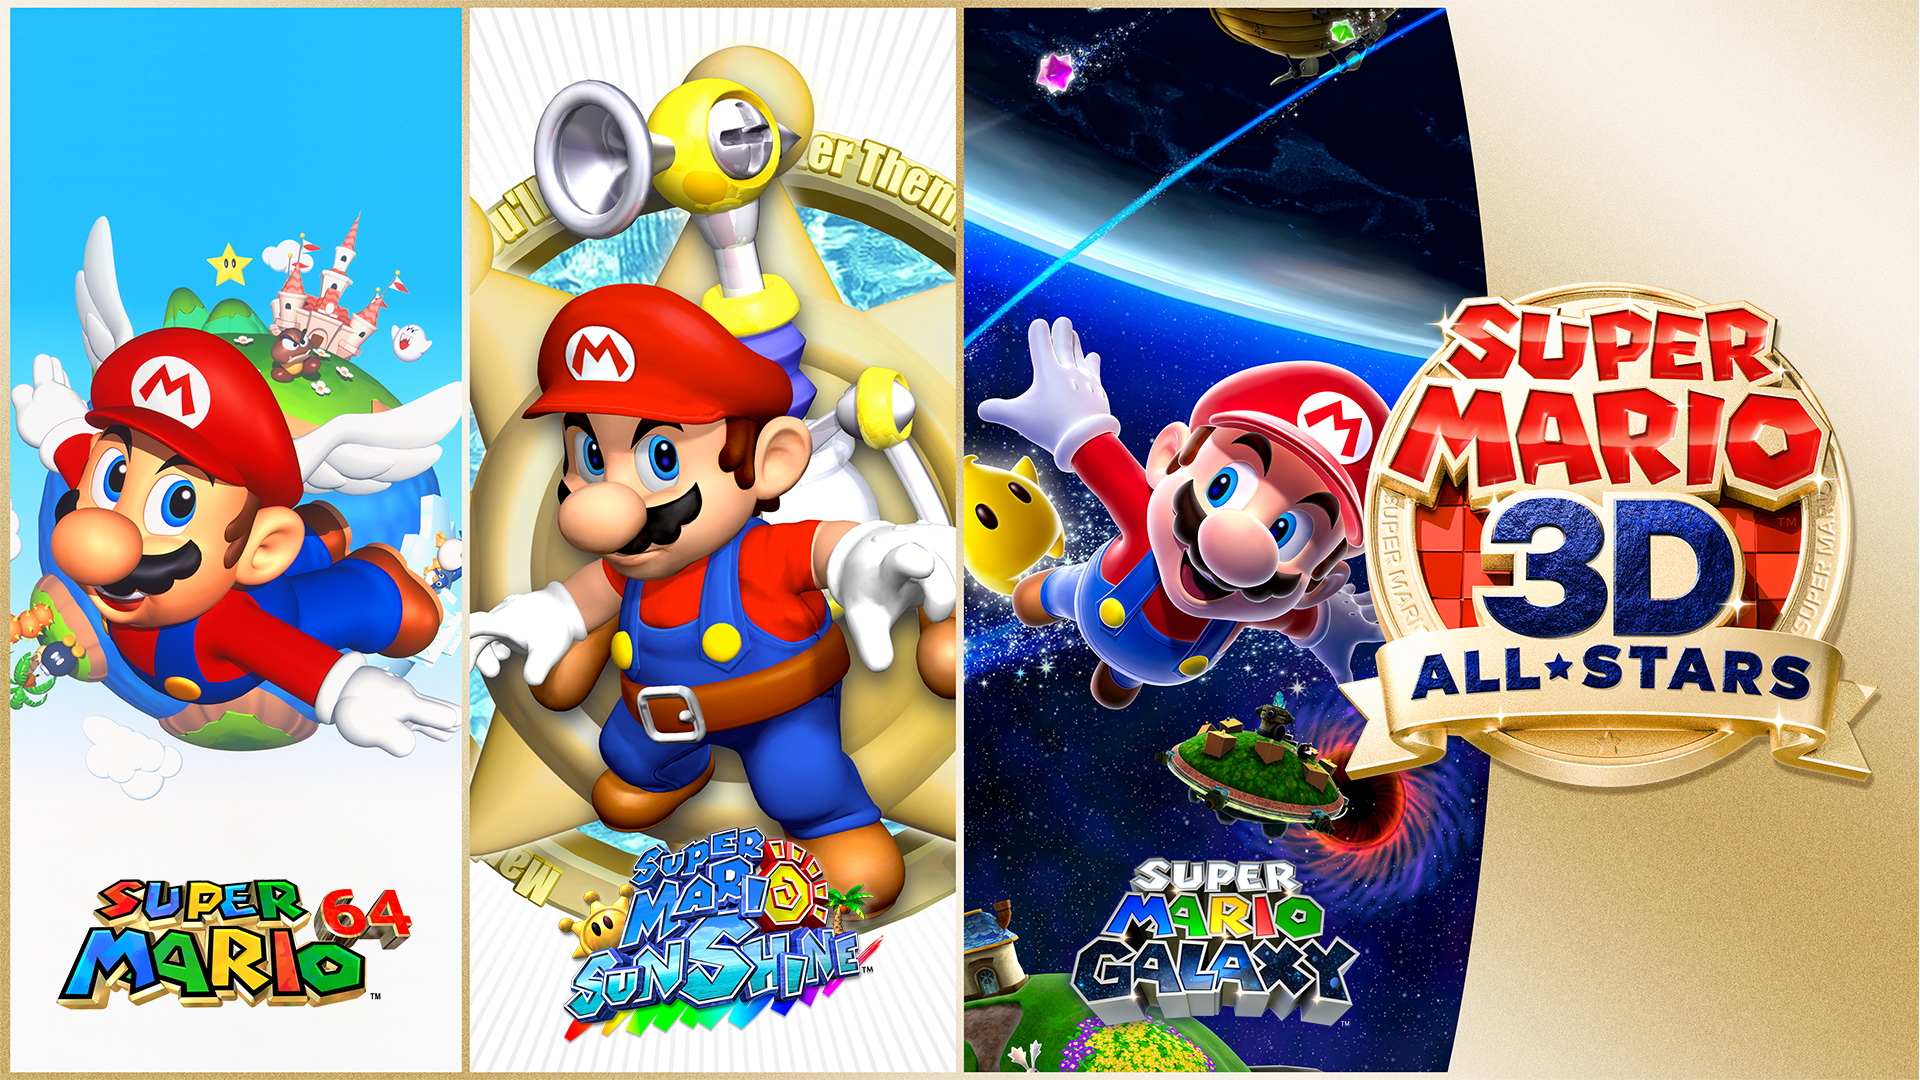 Super Mario 3D All-Stars Review - Should You Buy It?